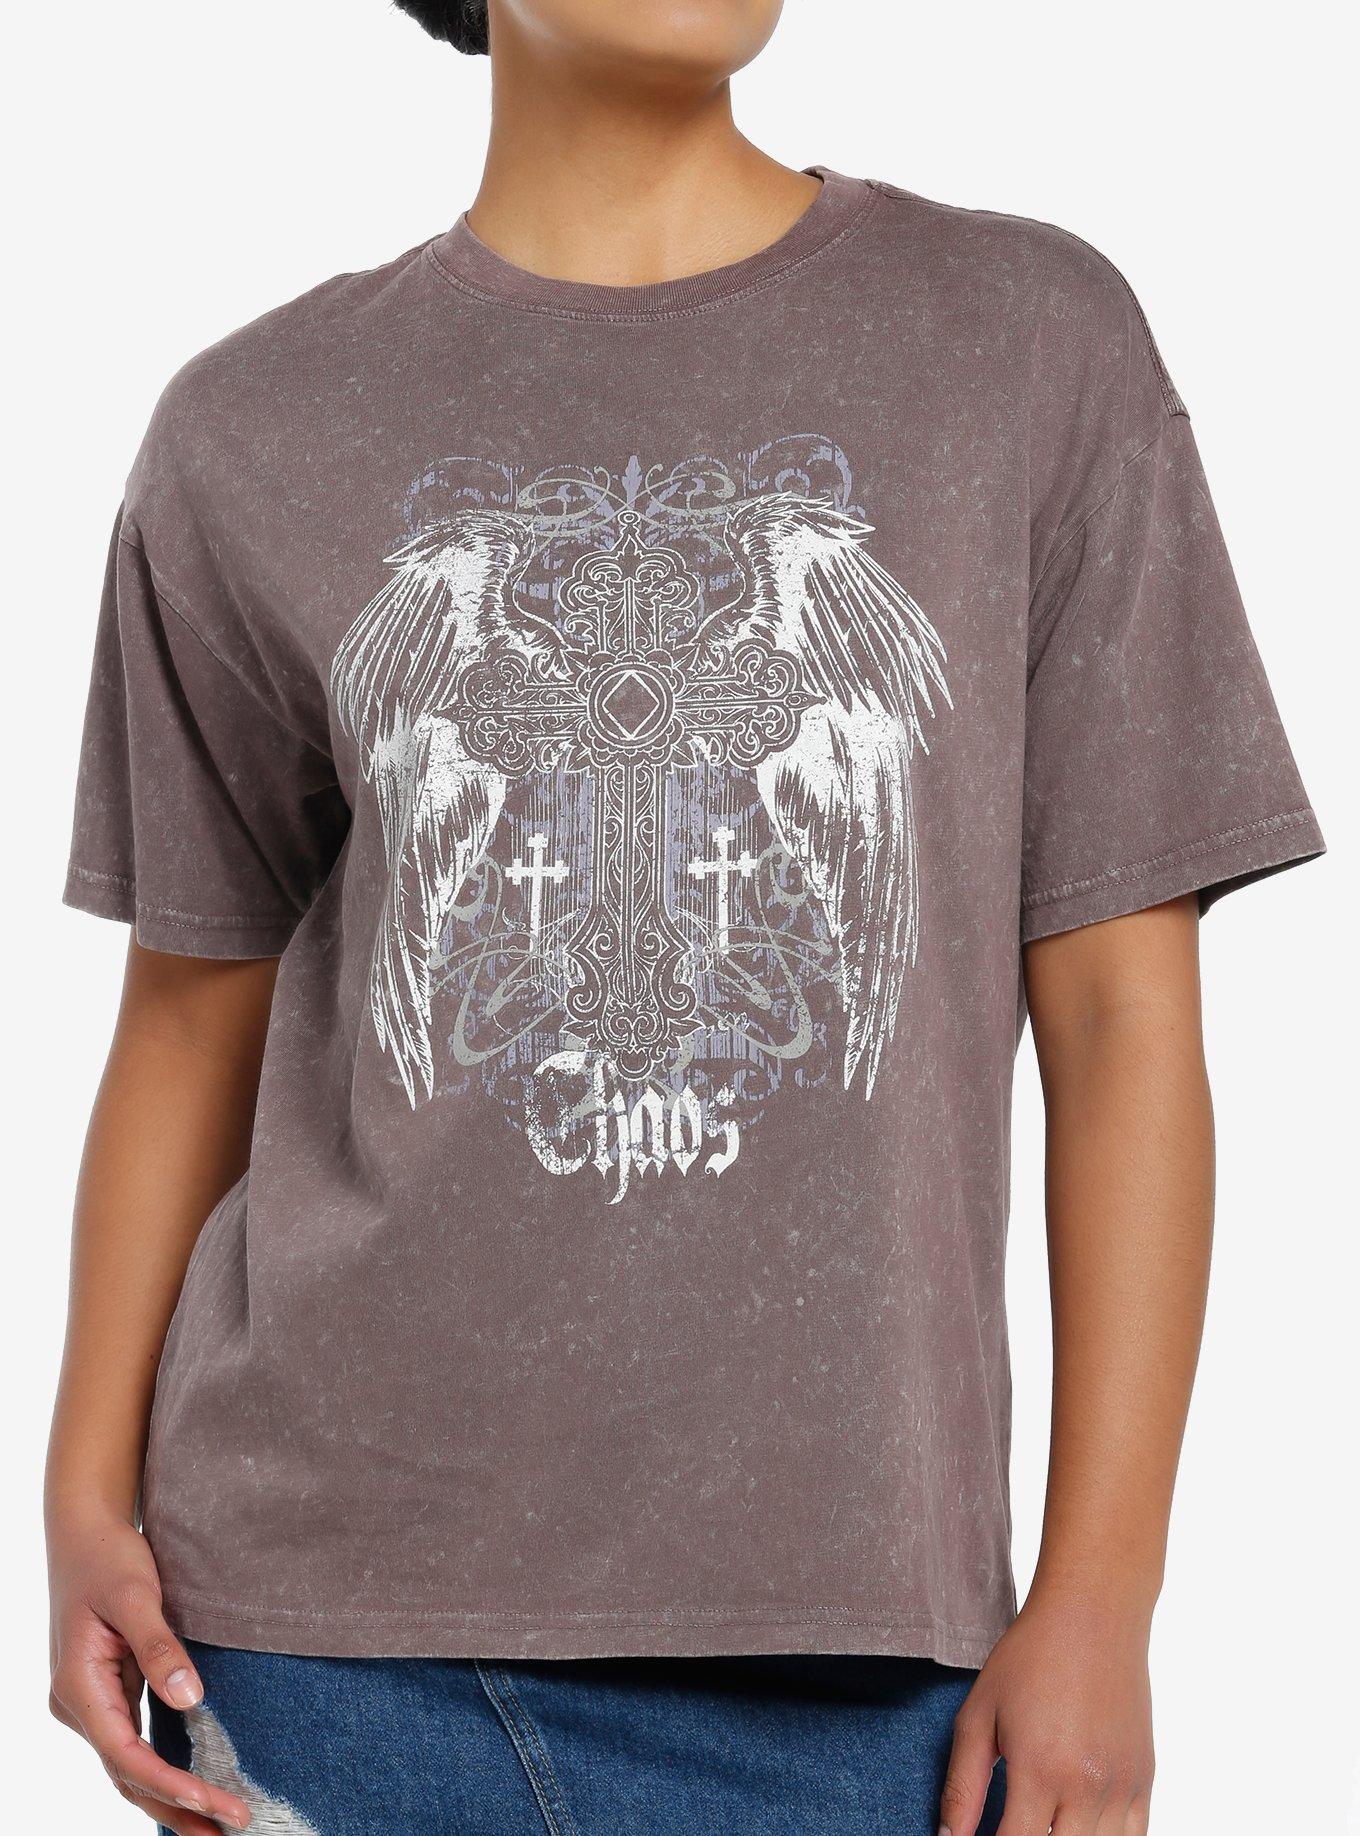 Social Collision Chaos Wings Mineral Wash Girls T-Shirt, BLUE, hi-res